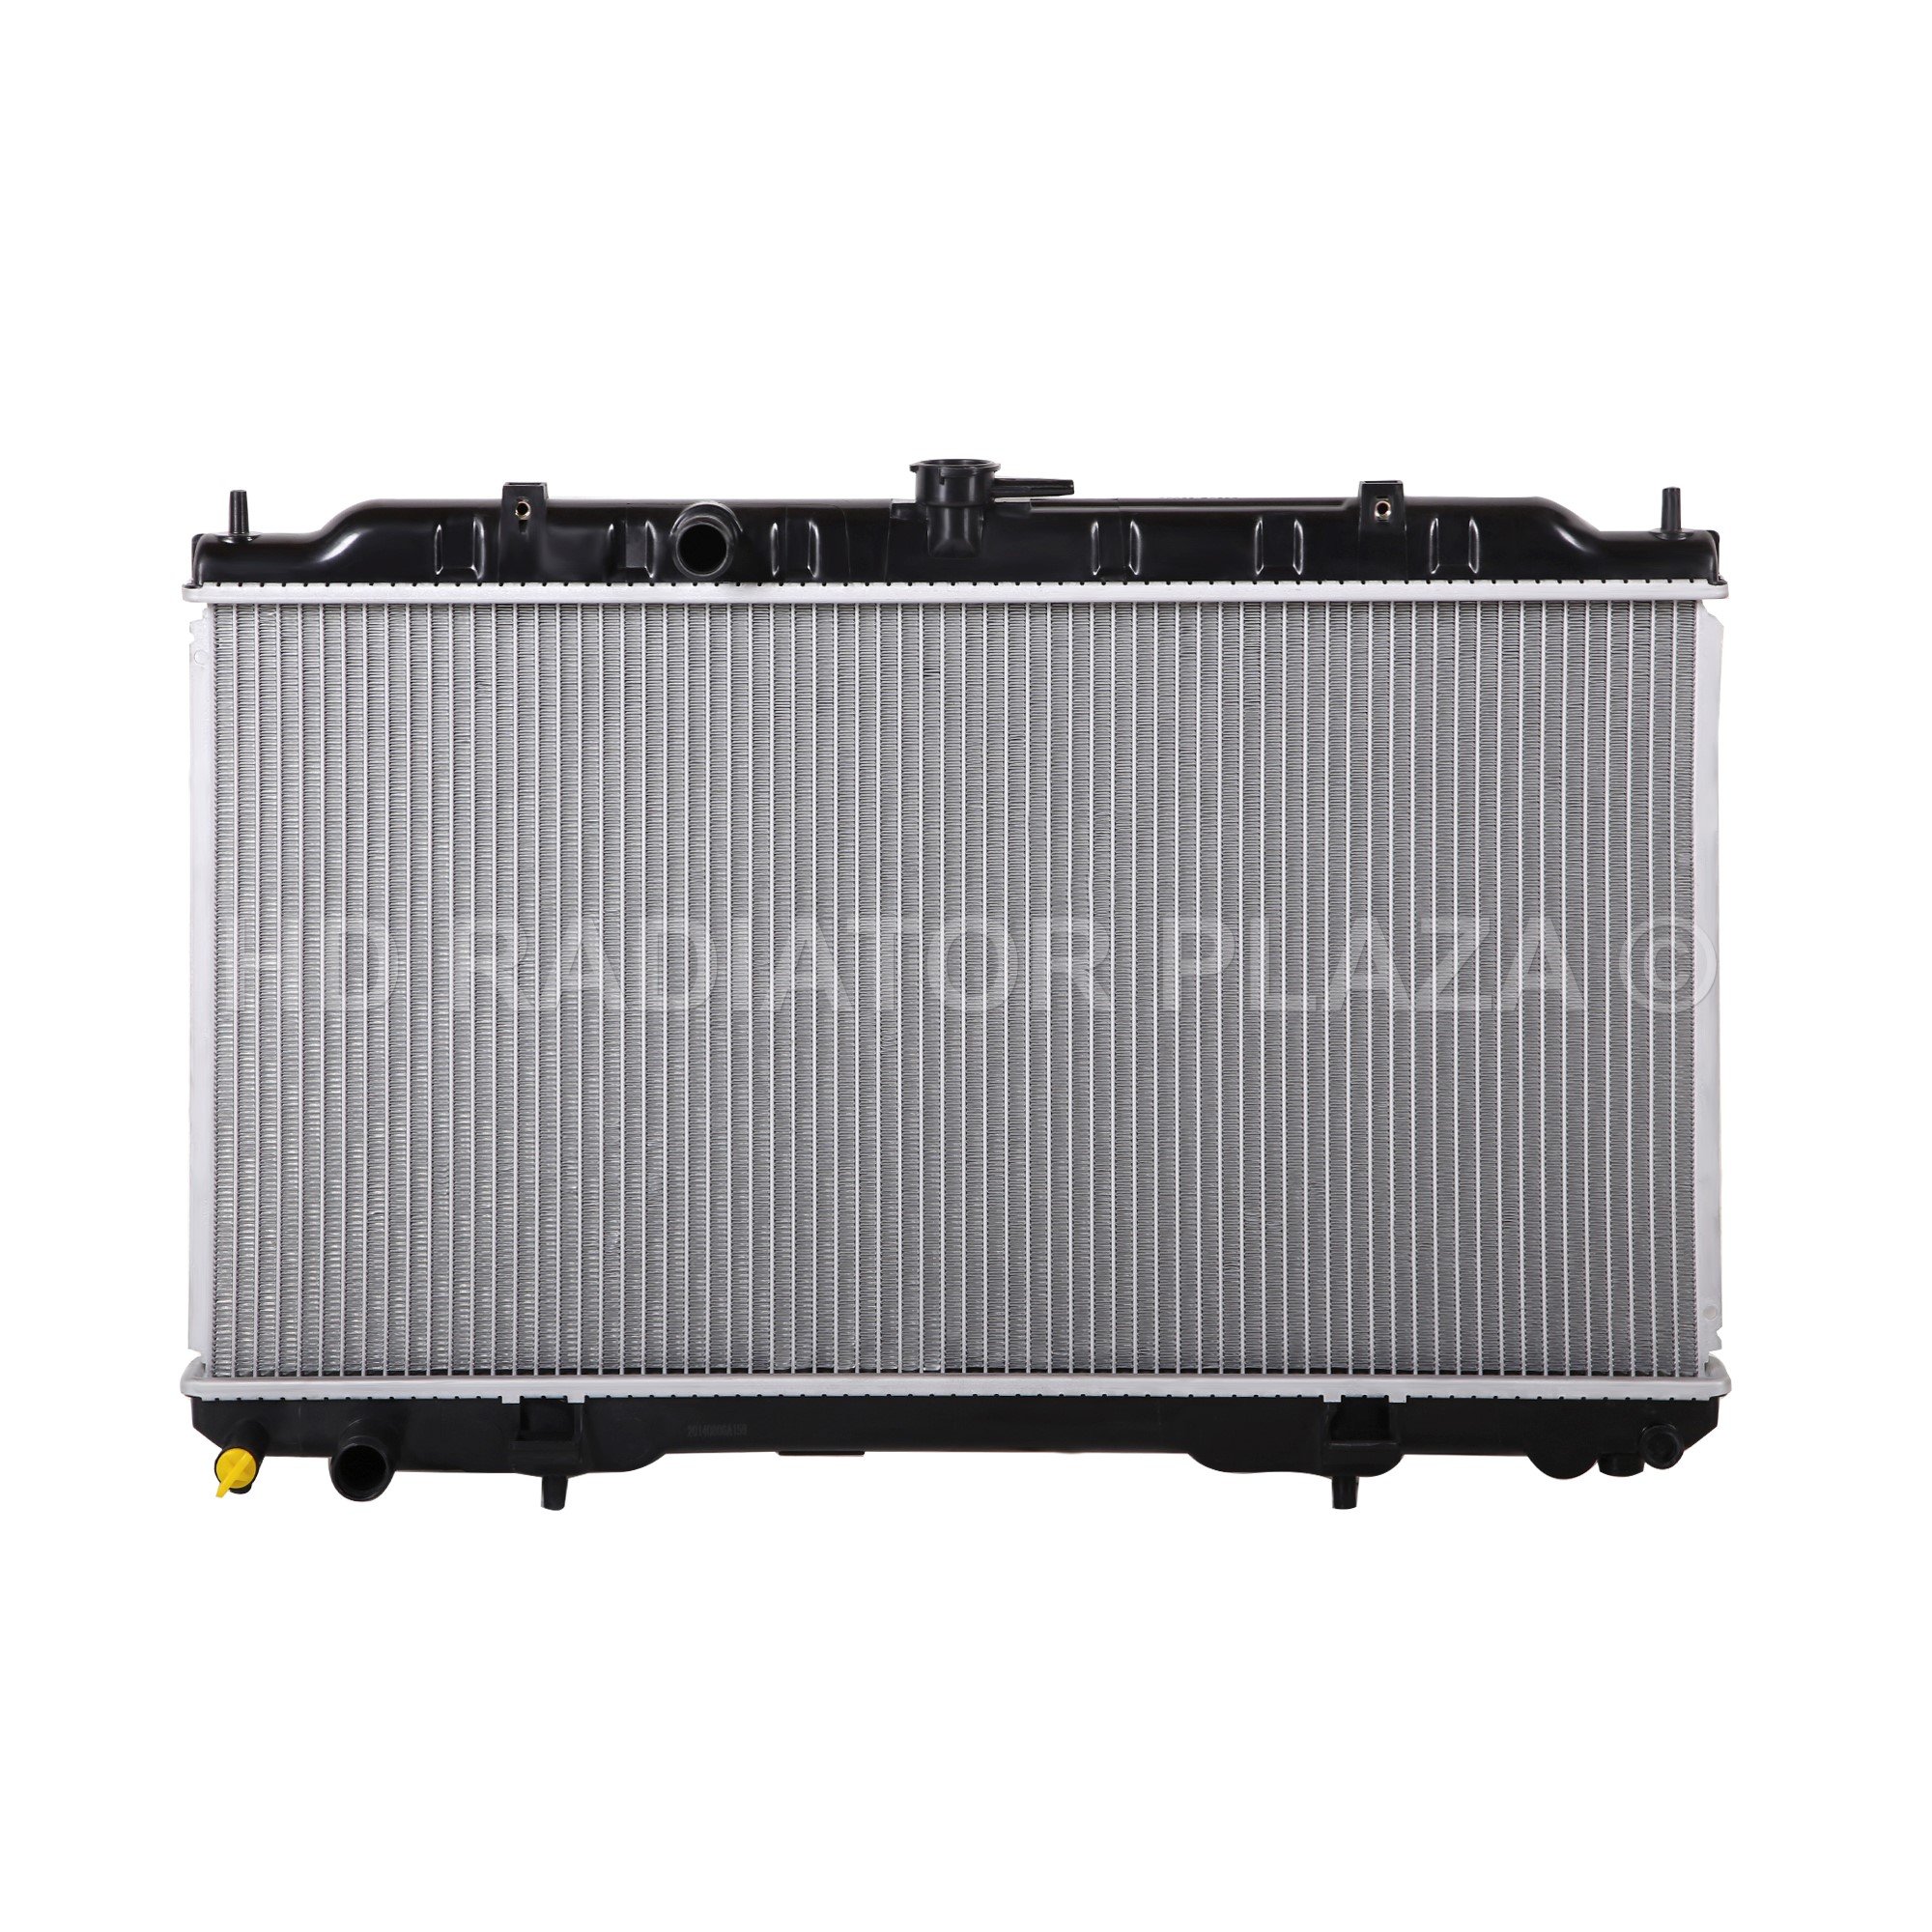 Radiator for 00-06 Nissan Sentra 1.8l l4